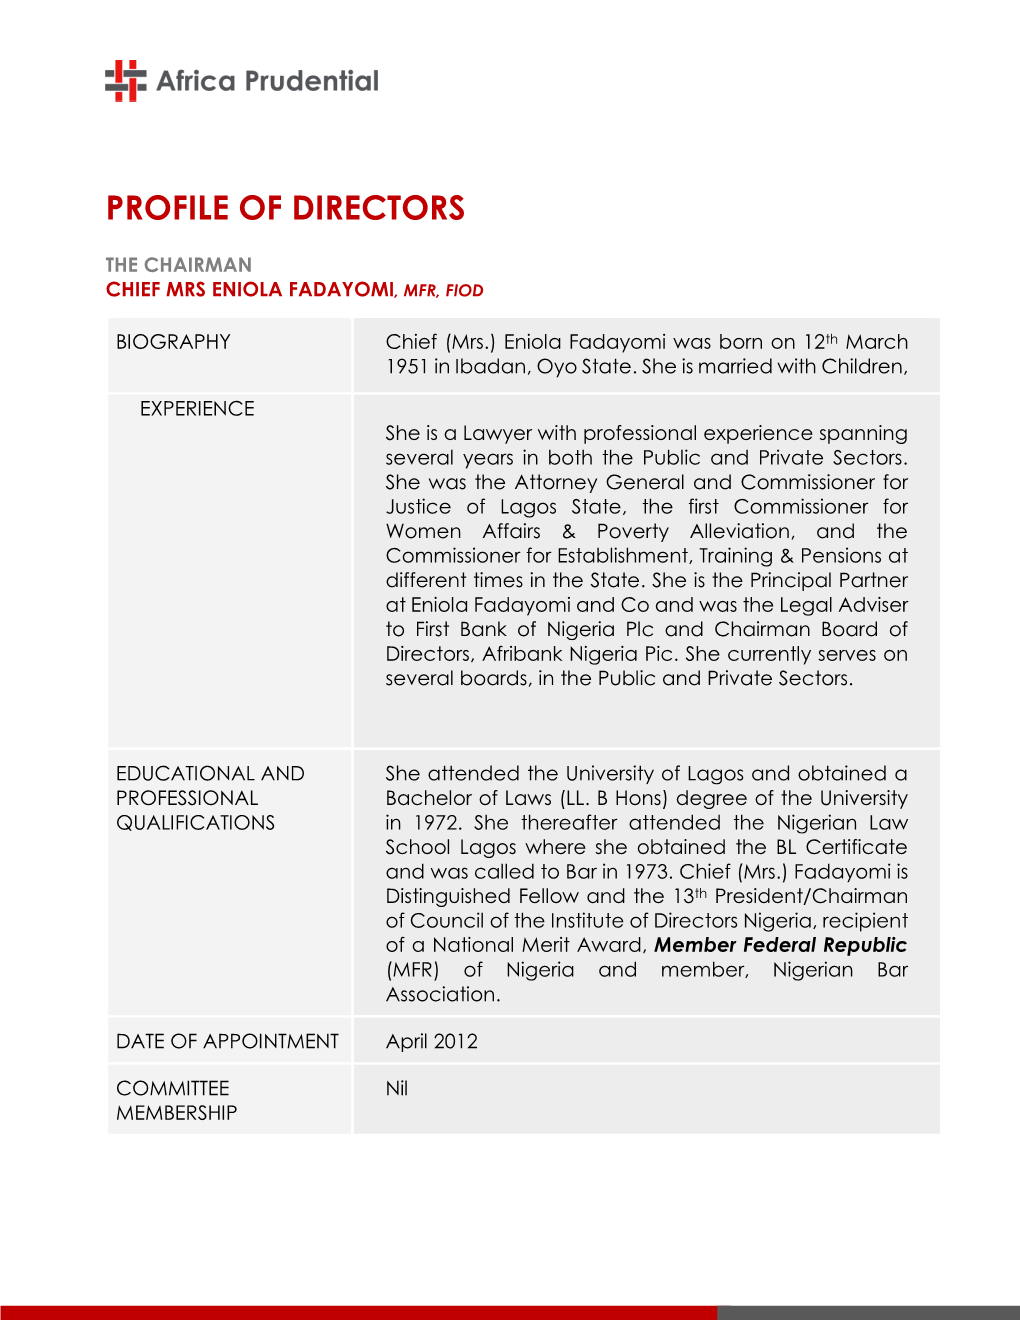 Profile of Directors